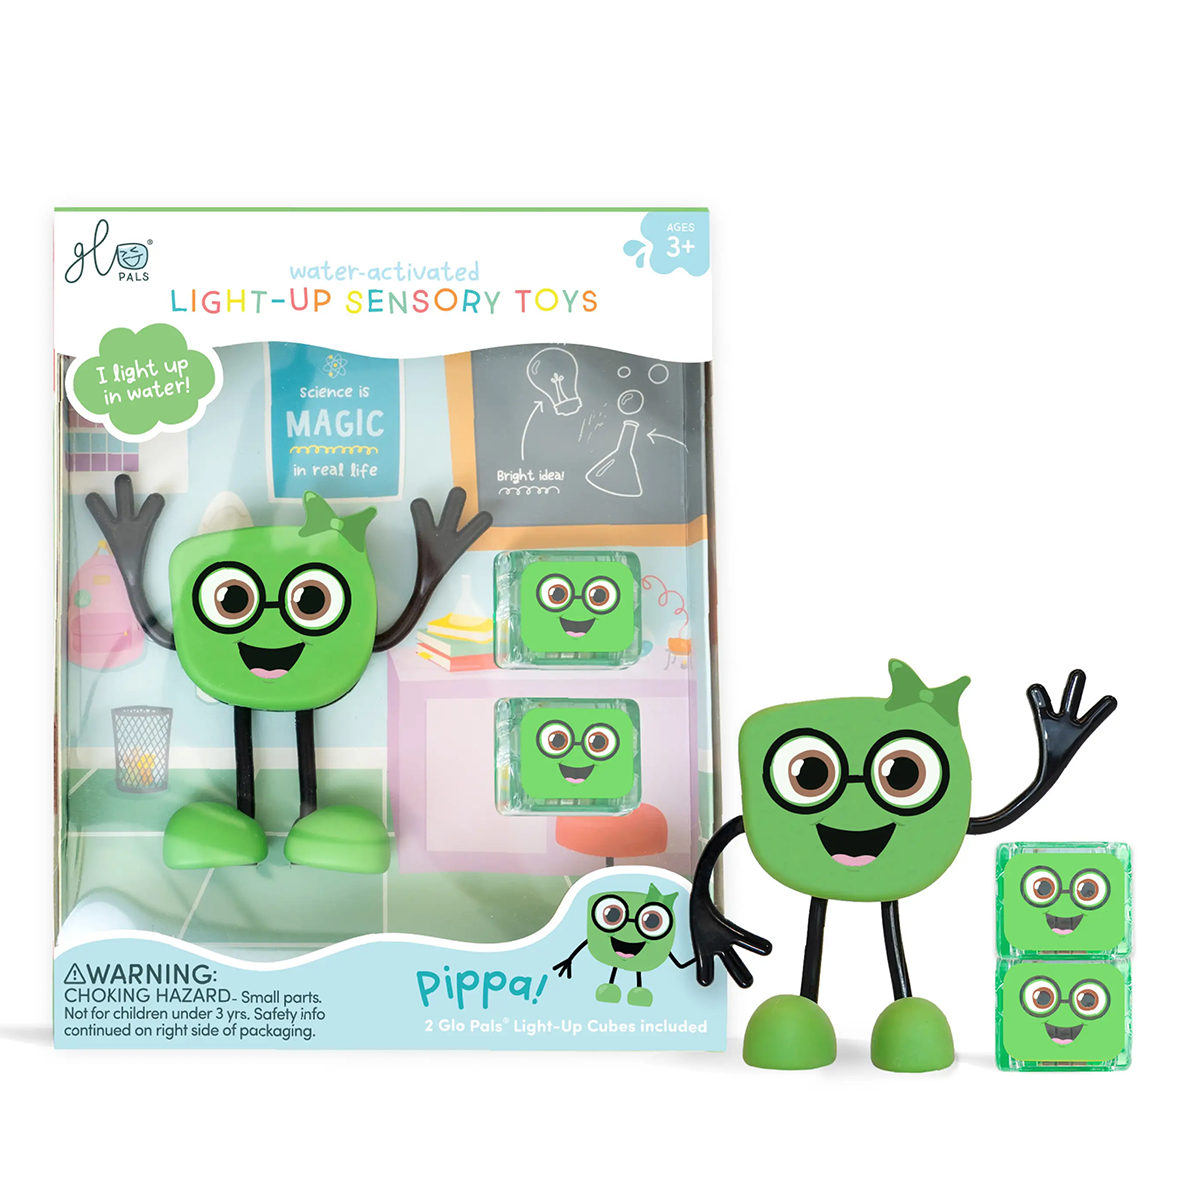 Glo Pals Pippa Green Light Up Sensory Bath Toy